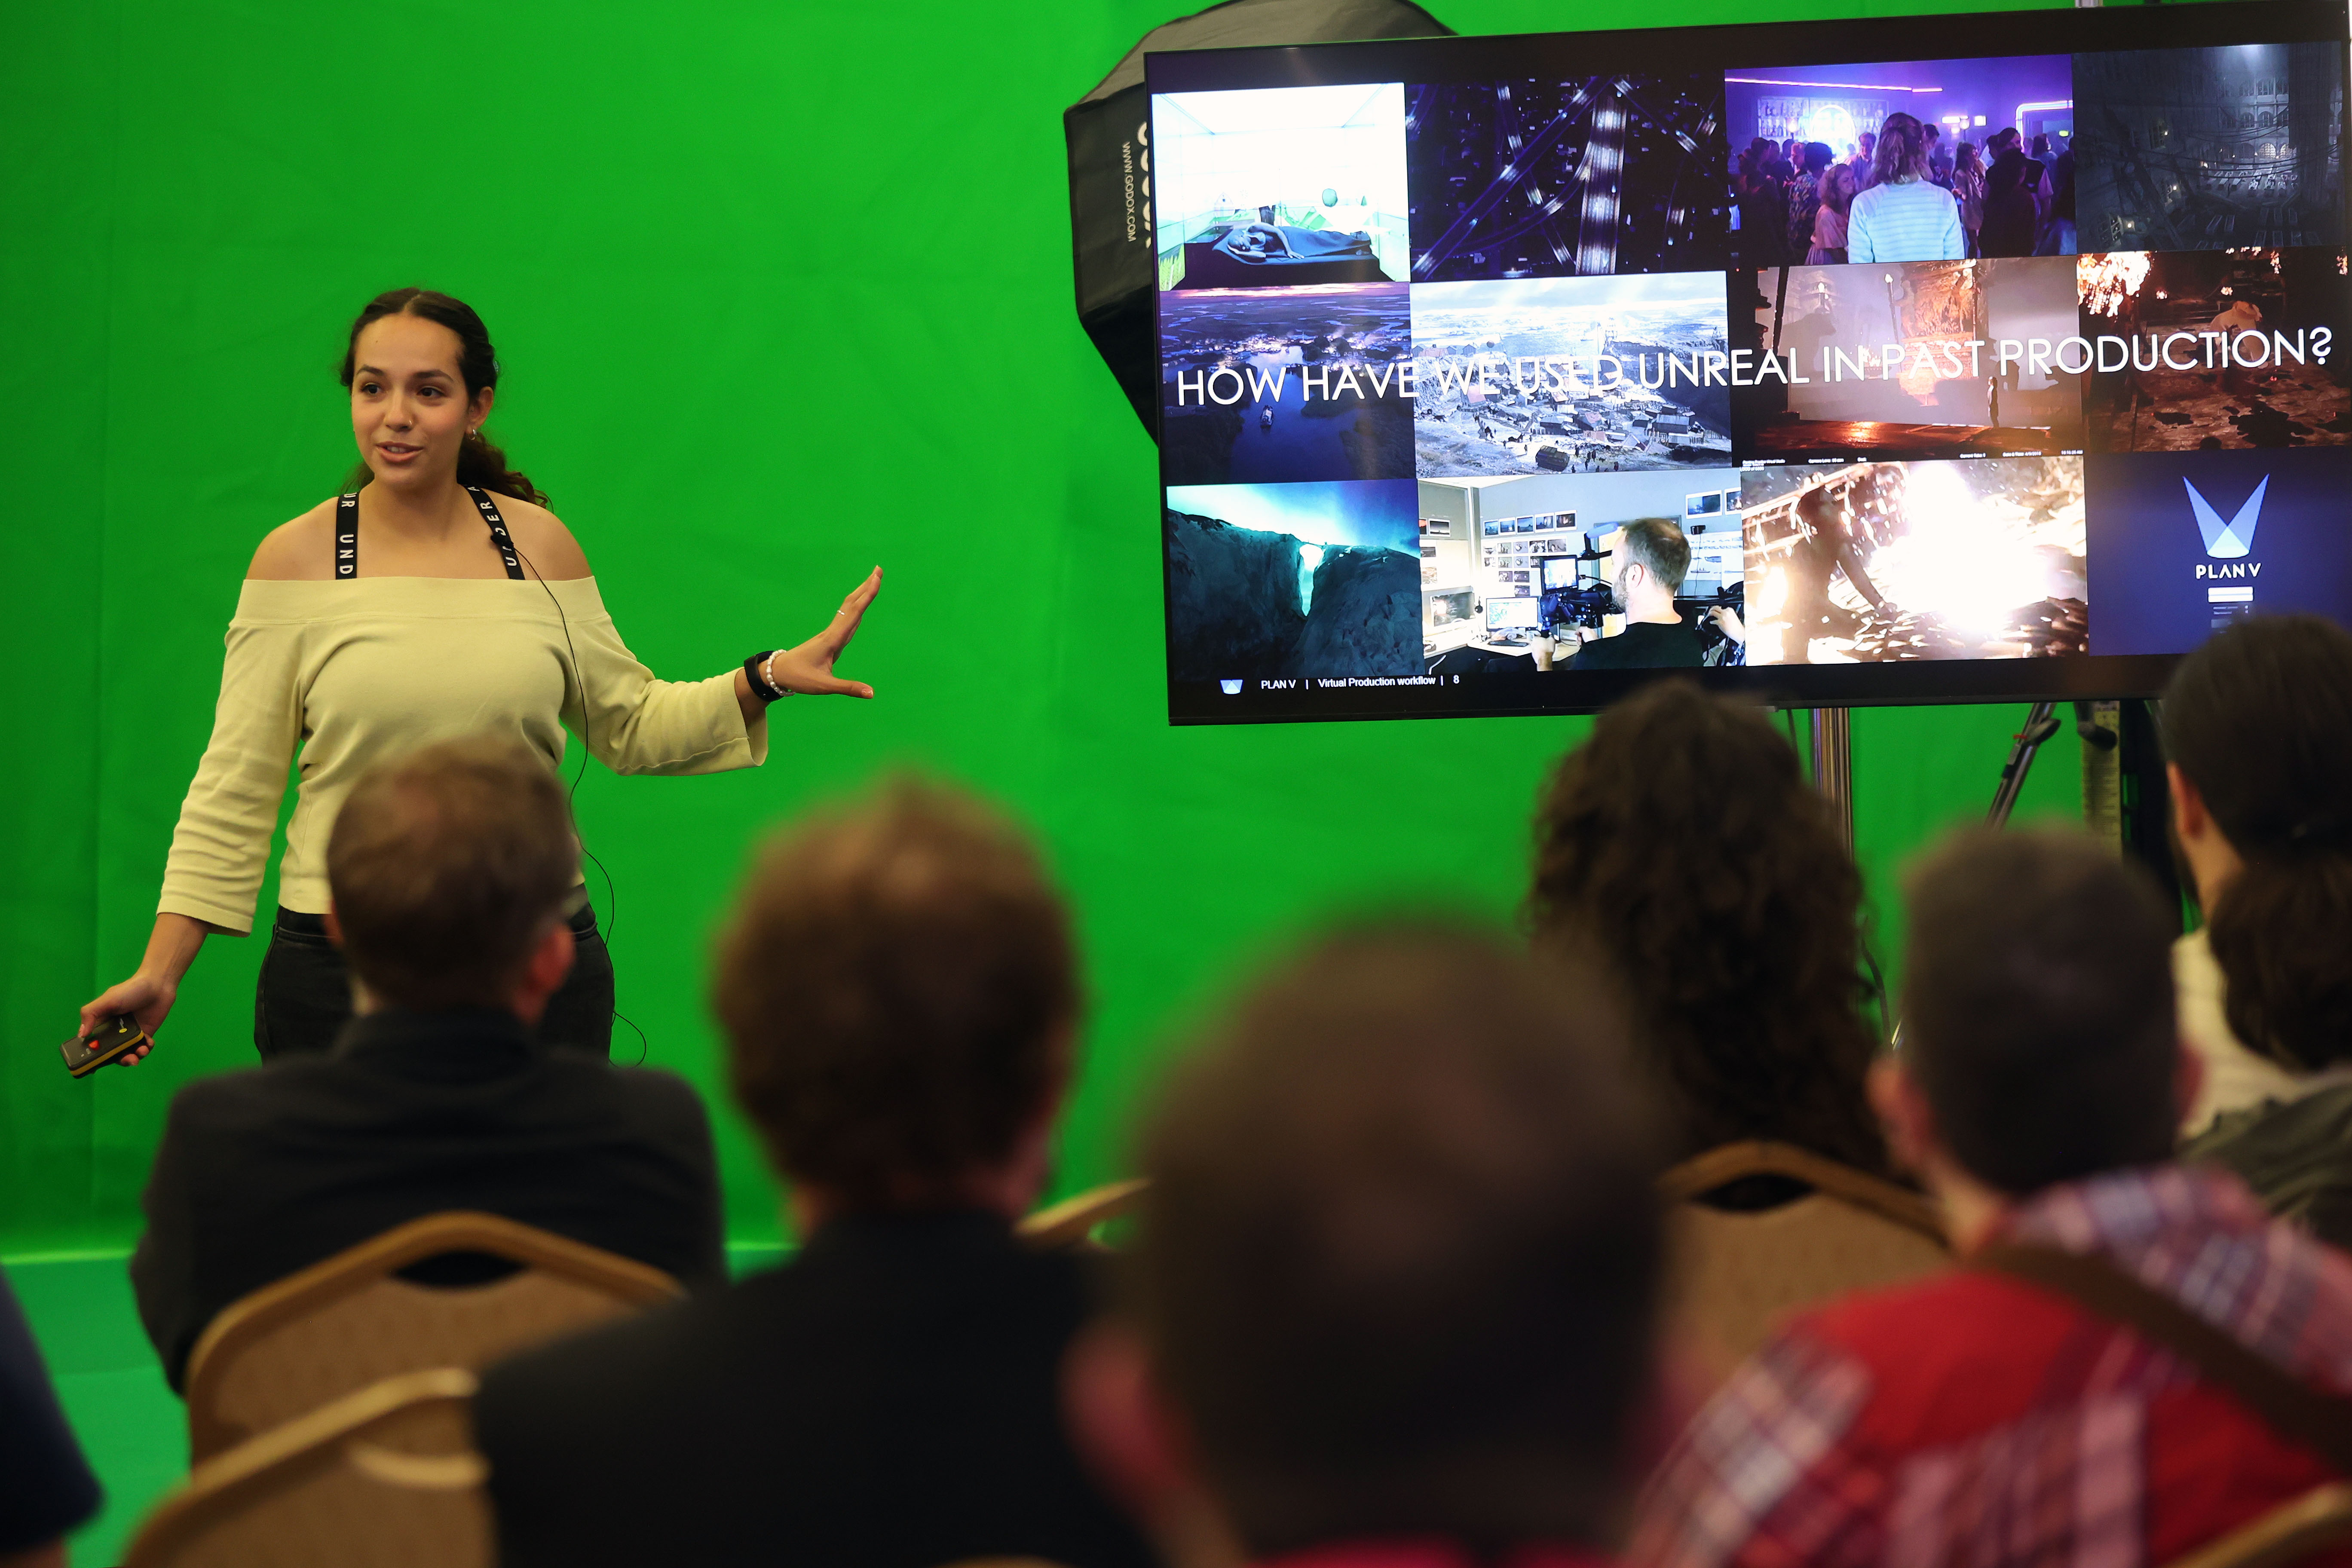 Yassmine Najimi of Painting Practice presents Plan V on TV screen infront of green screen